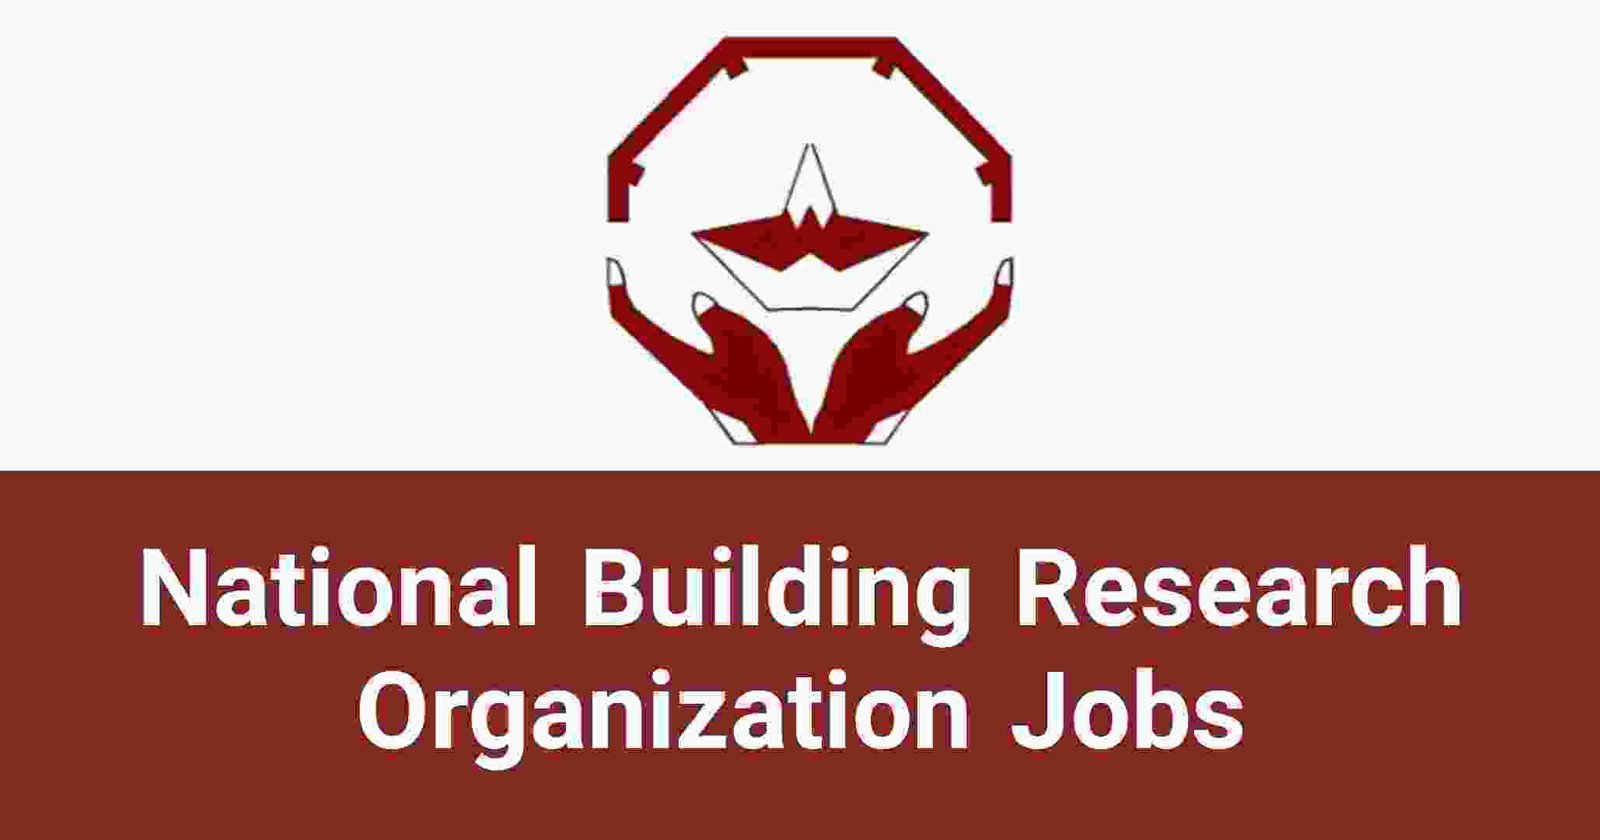 National Building Research Organization Jobs Vacancies Careers Applications